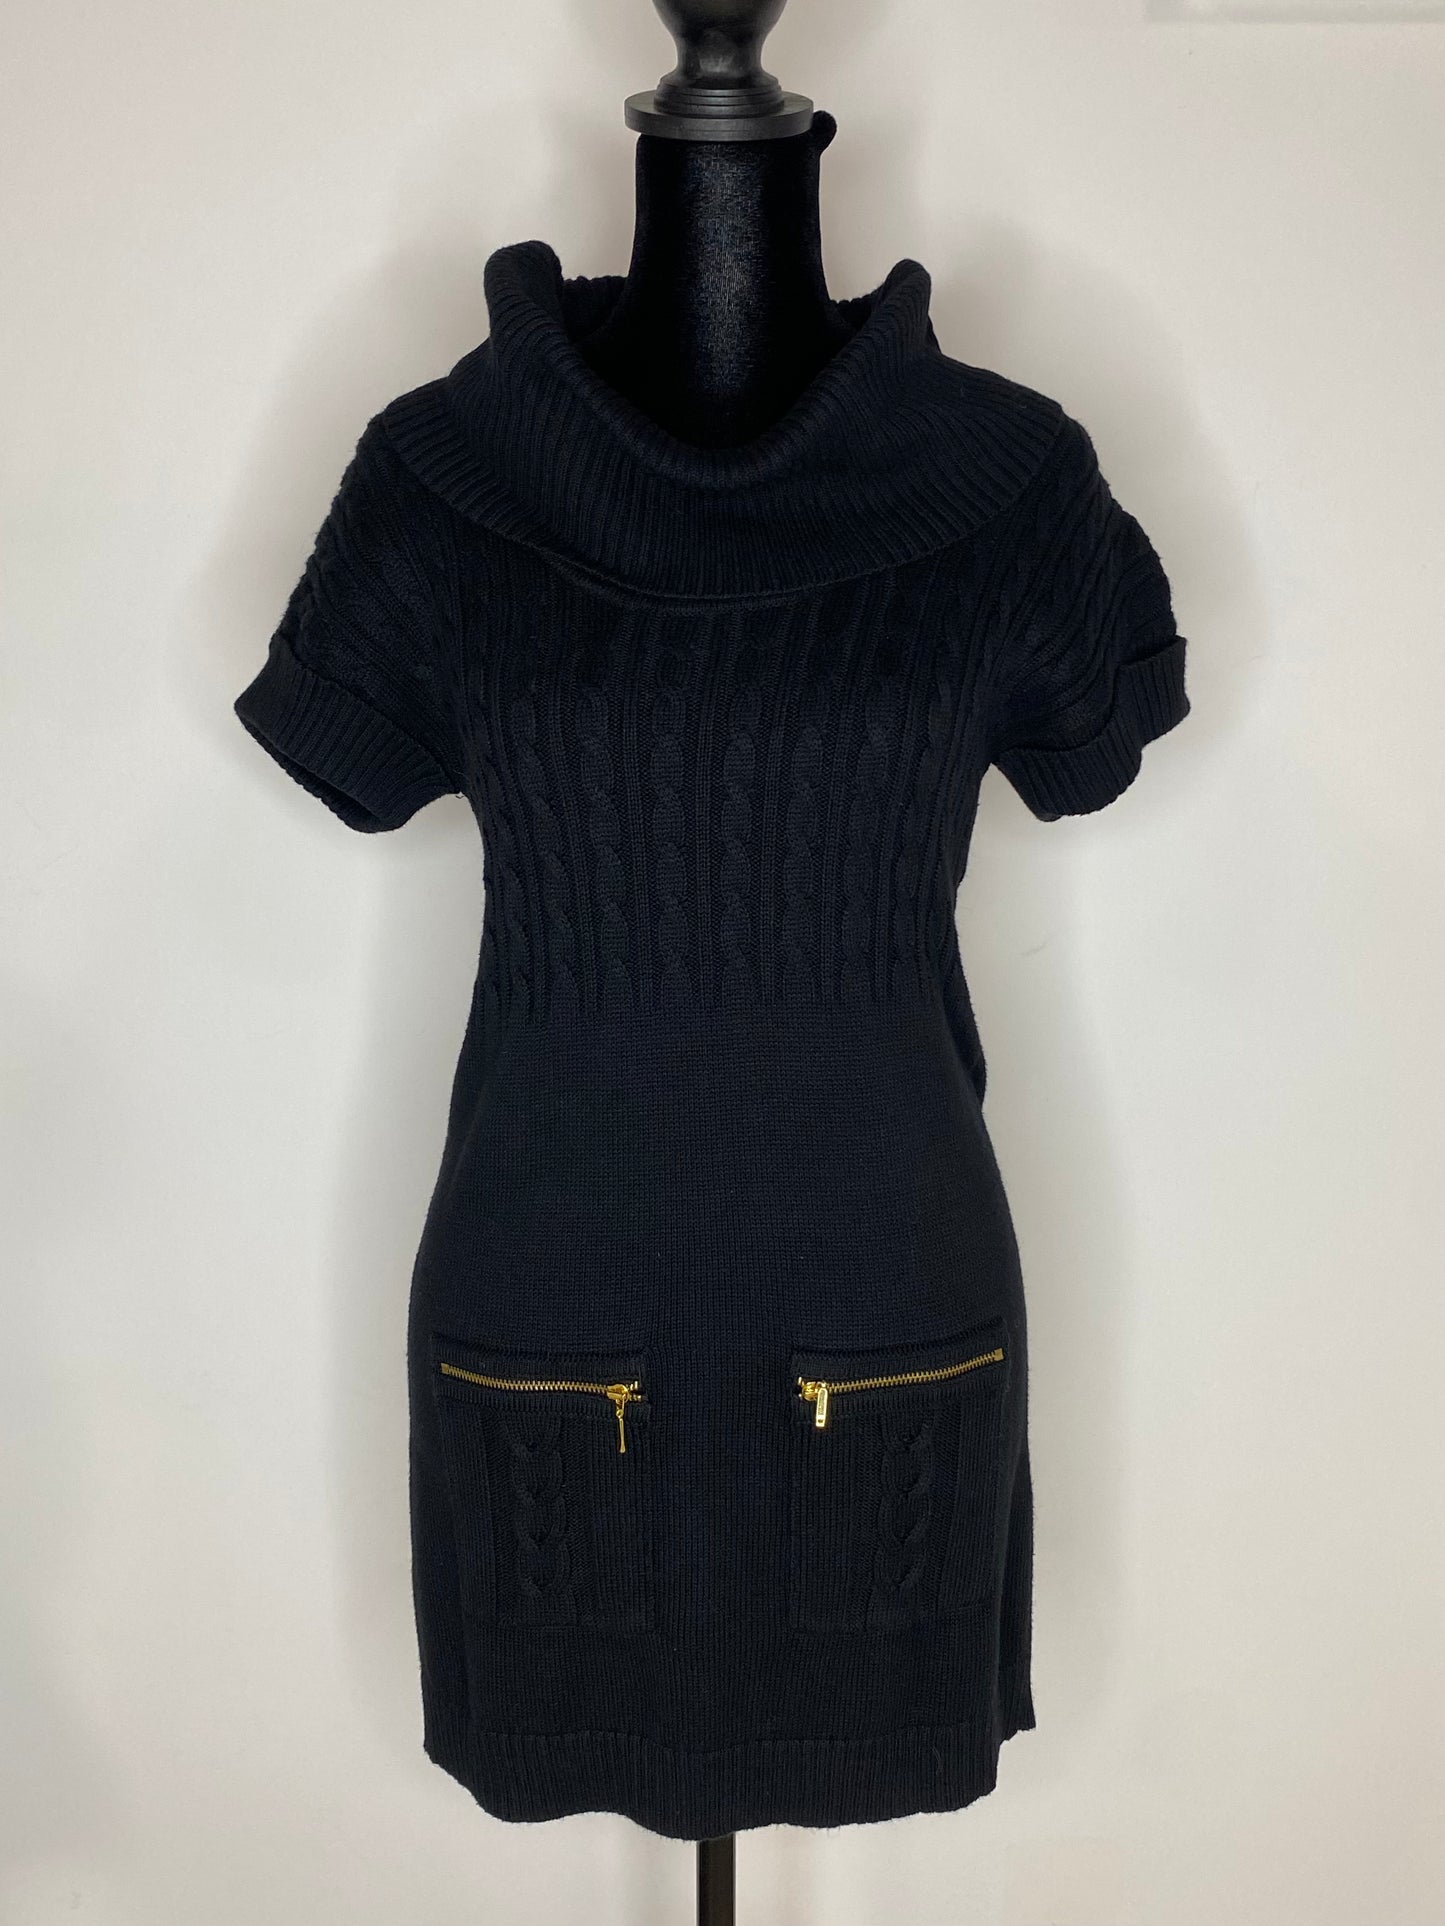 Black Sweater Dress w/ Gold Zipper Pockets